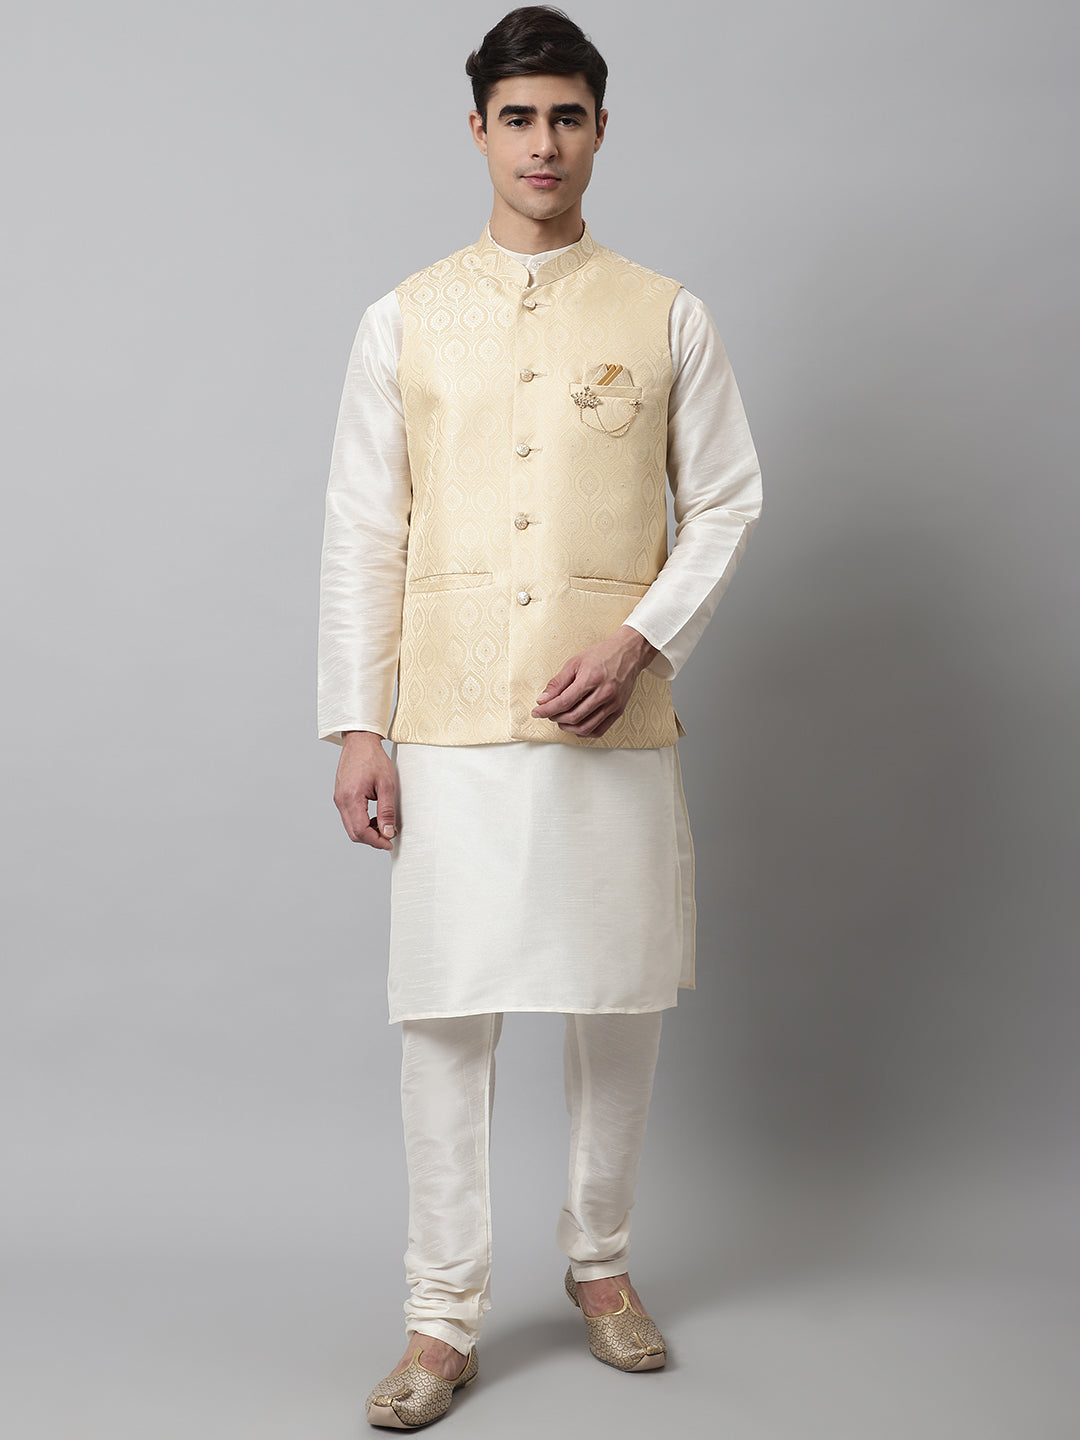 Treemoda Peach Nehru jacket For Men Stylish Latest Design Suitable for –  Yard of Deals